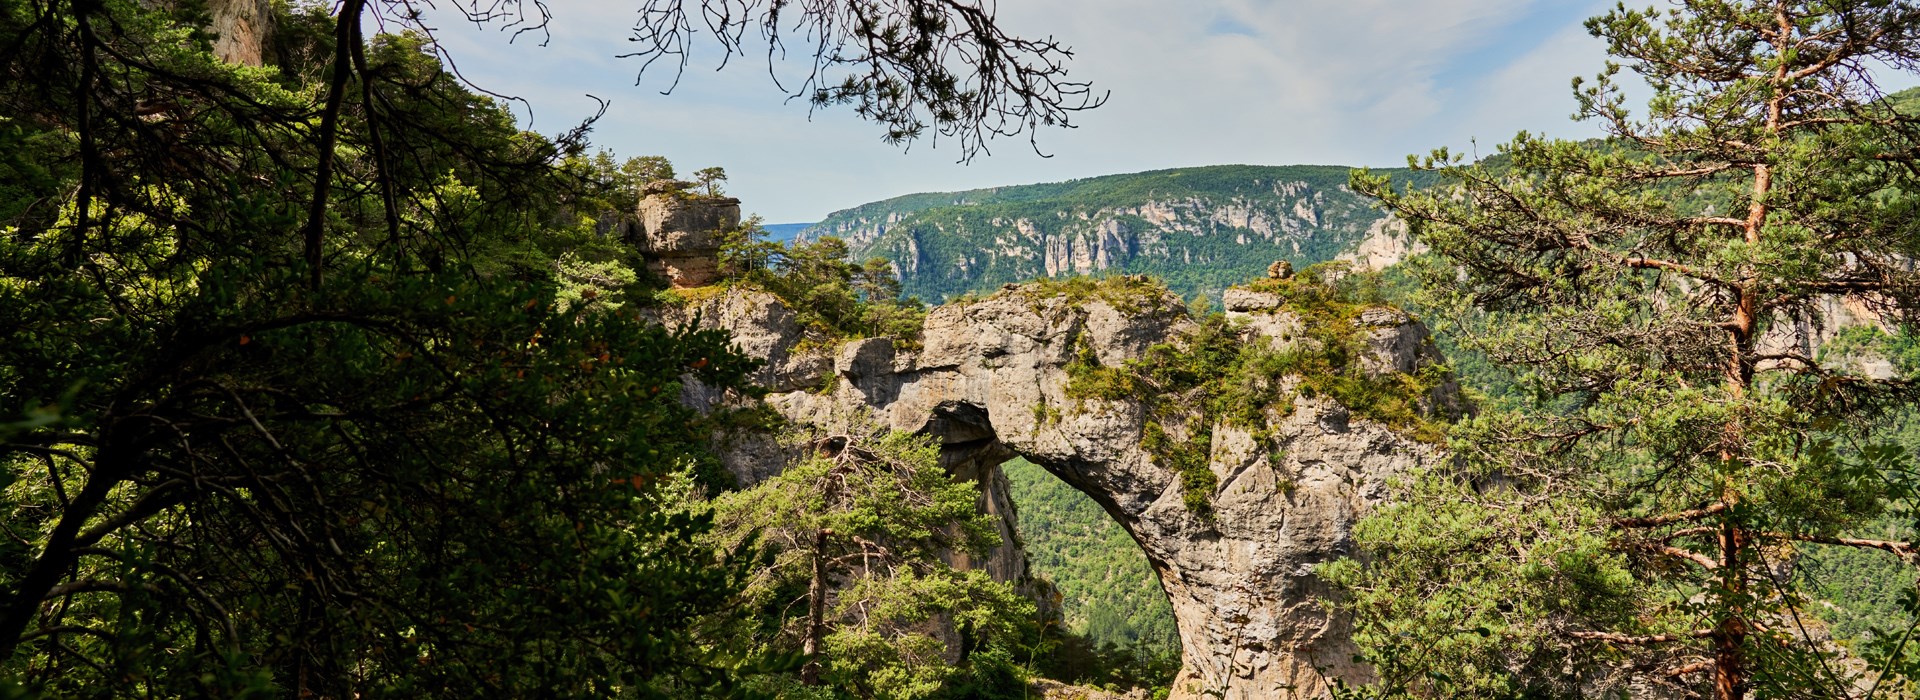 Visiter Les Gorges du Tarn en via ferrata - Occitanie